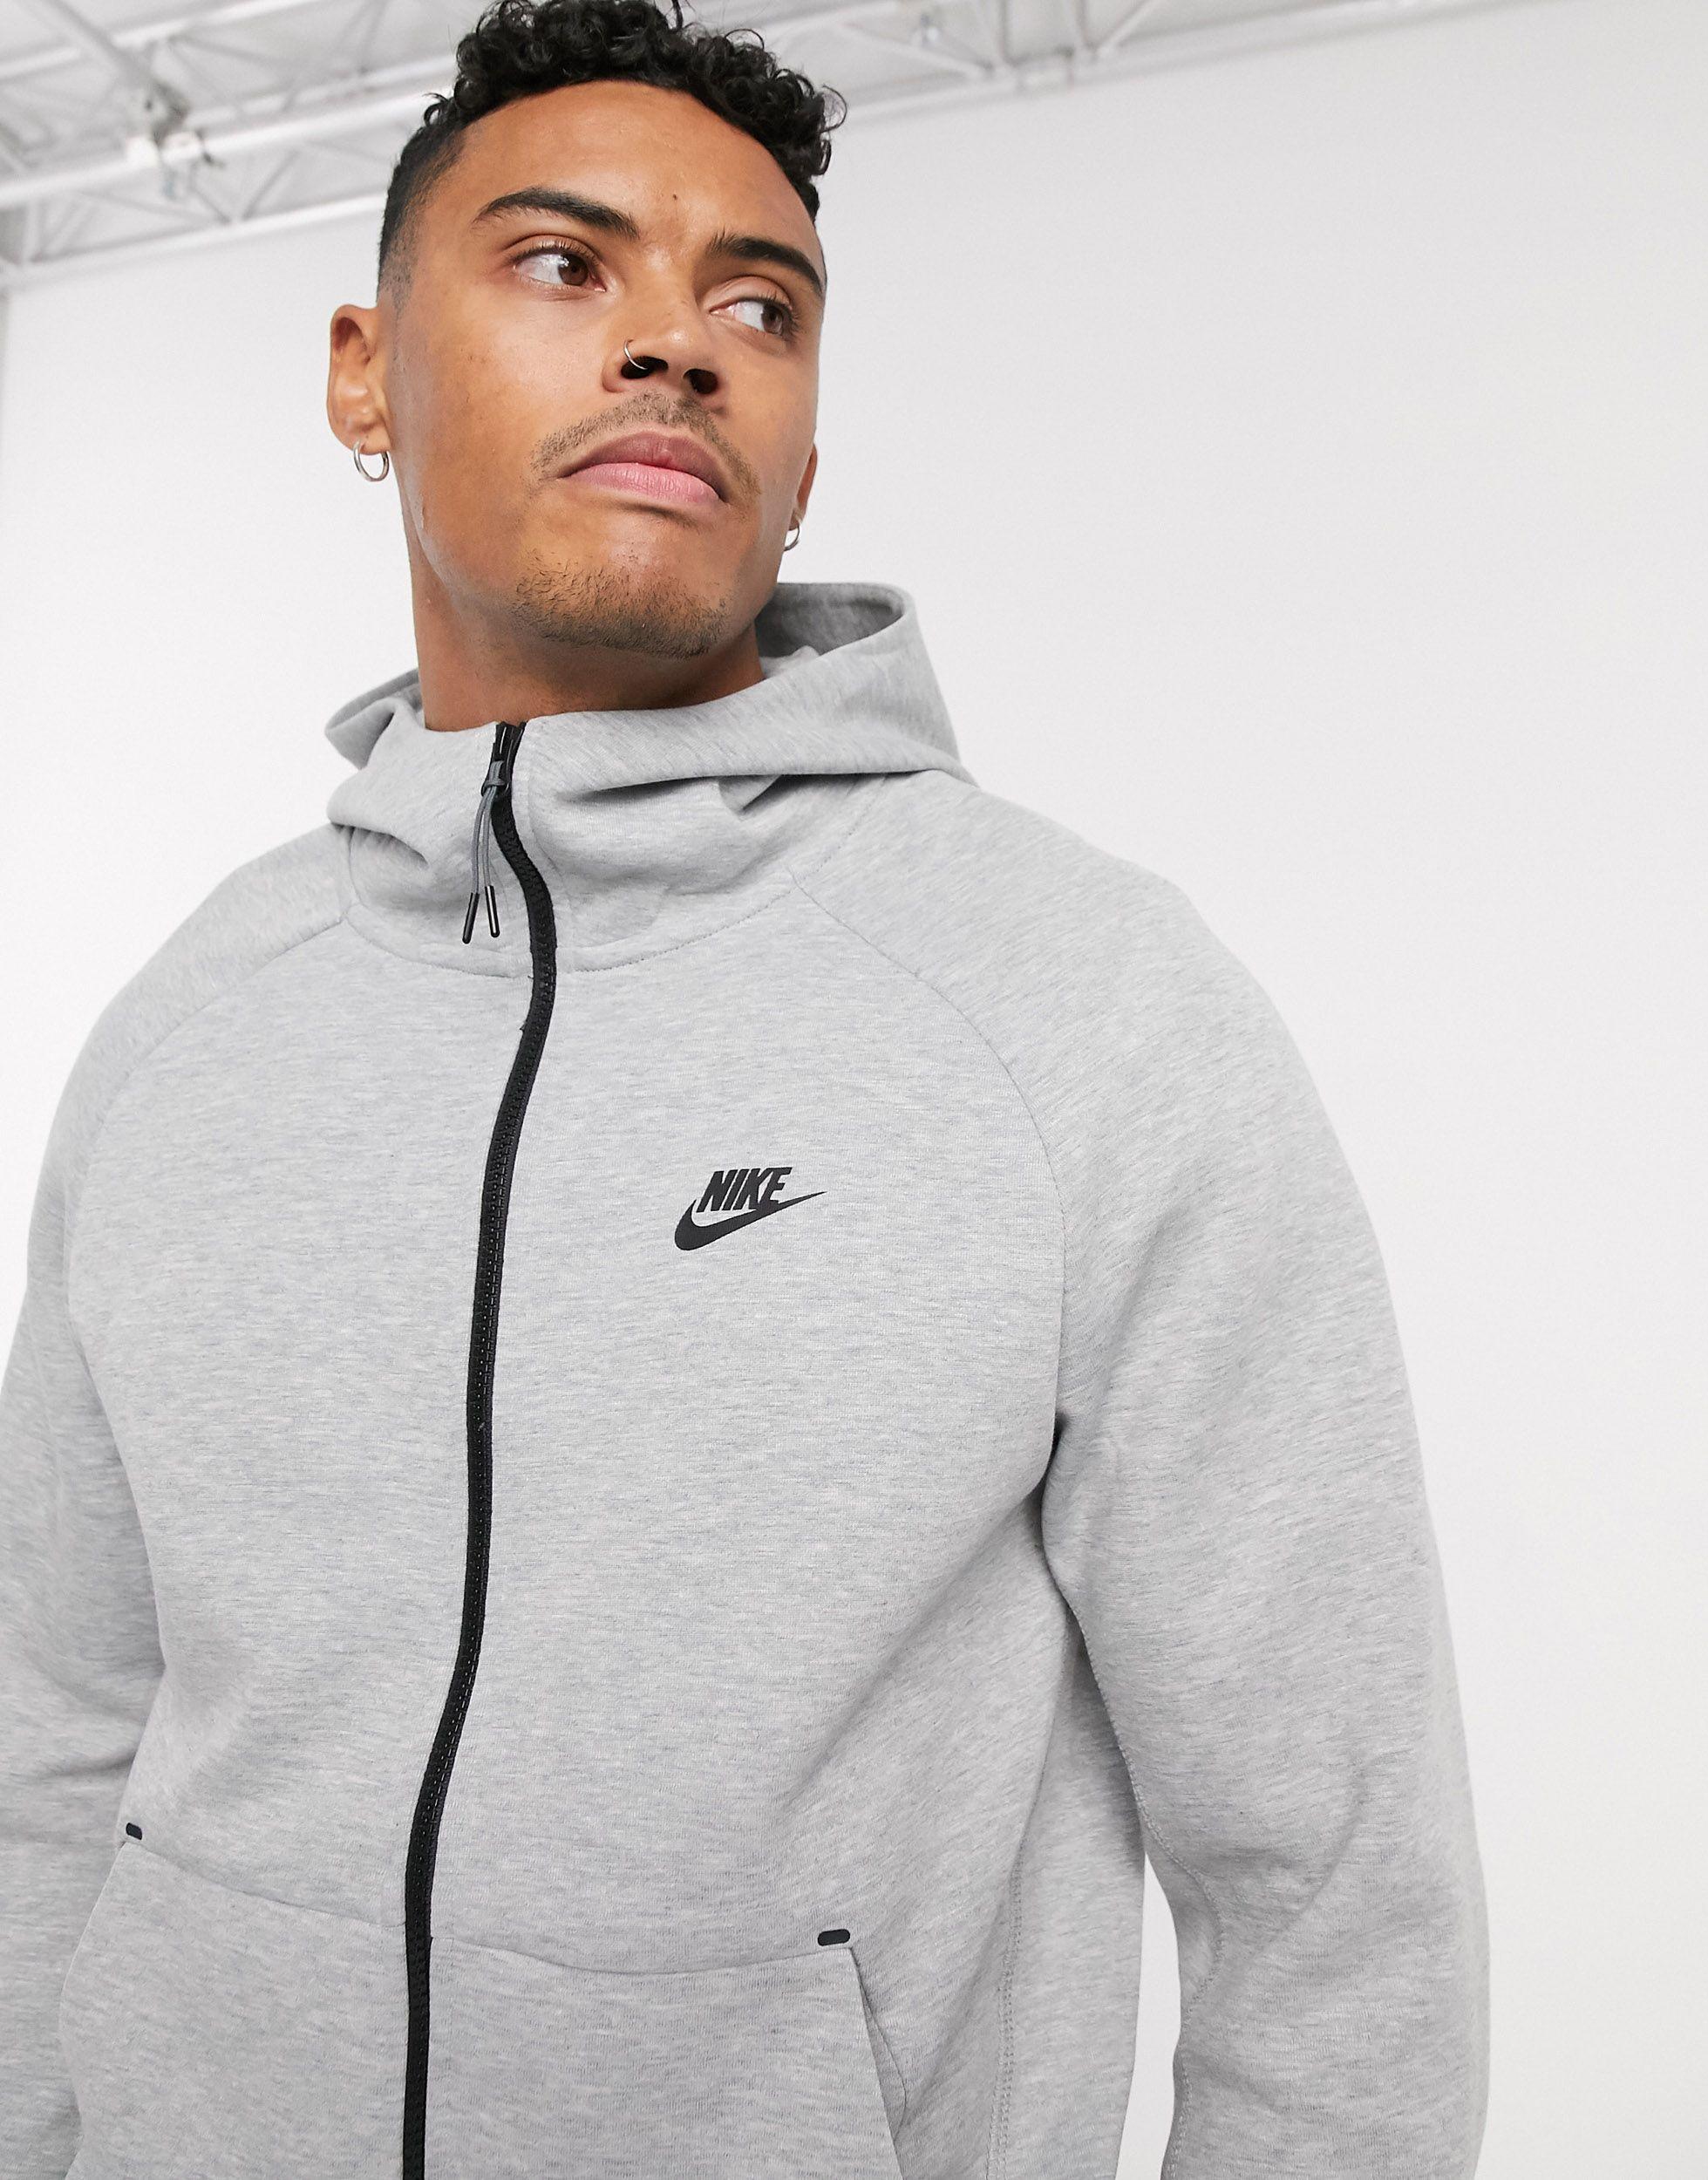 Nike Tech Fleece Full-zip Hoodie in Dark Grey & Black (Grey) for Men - Lyst